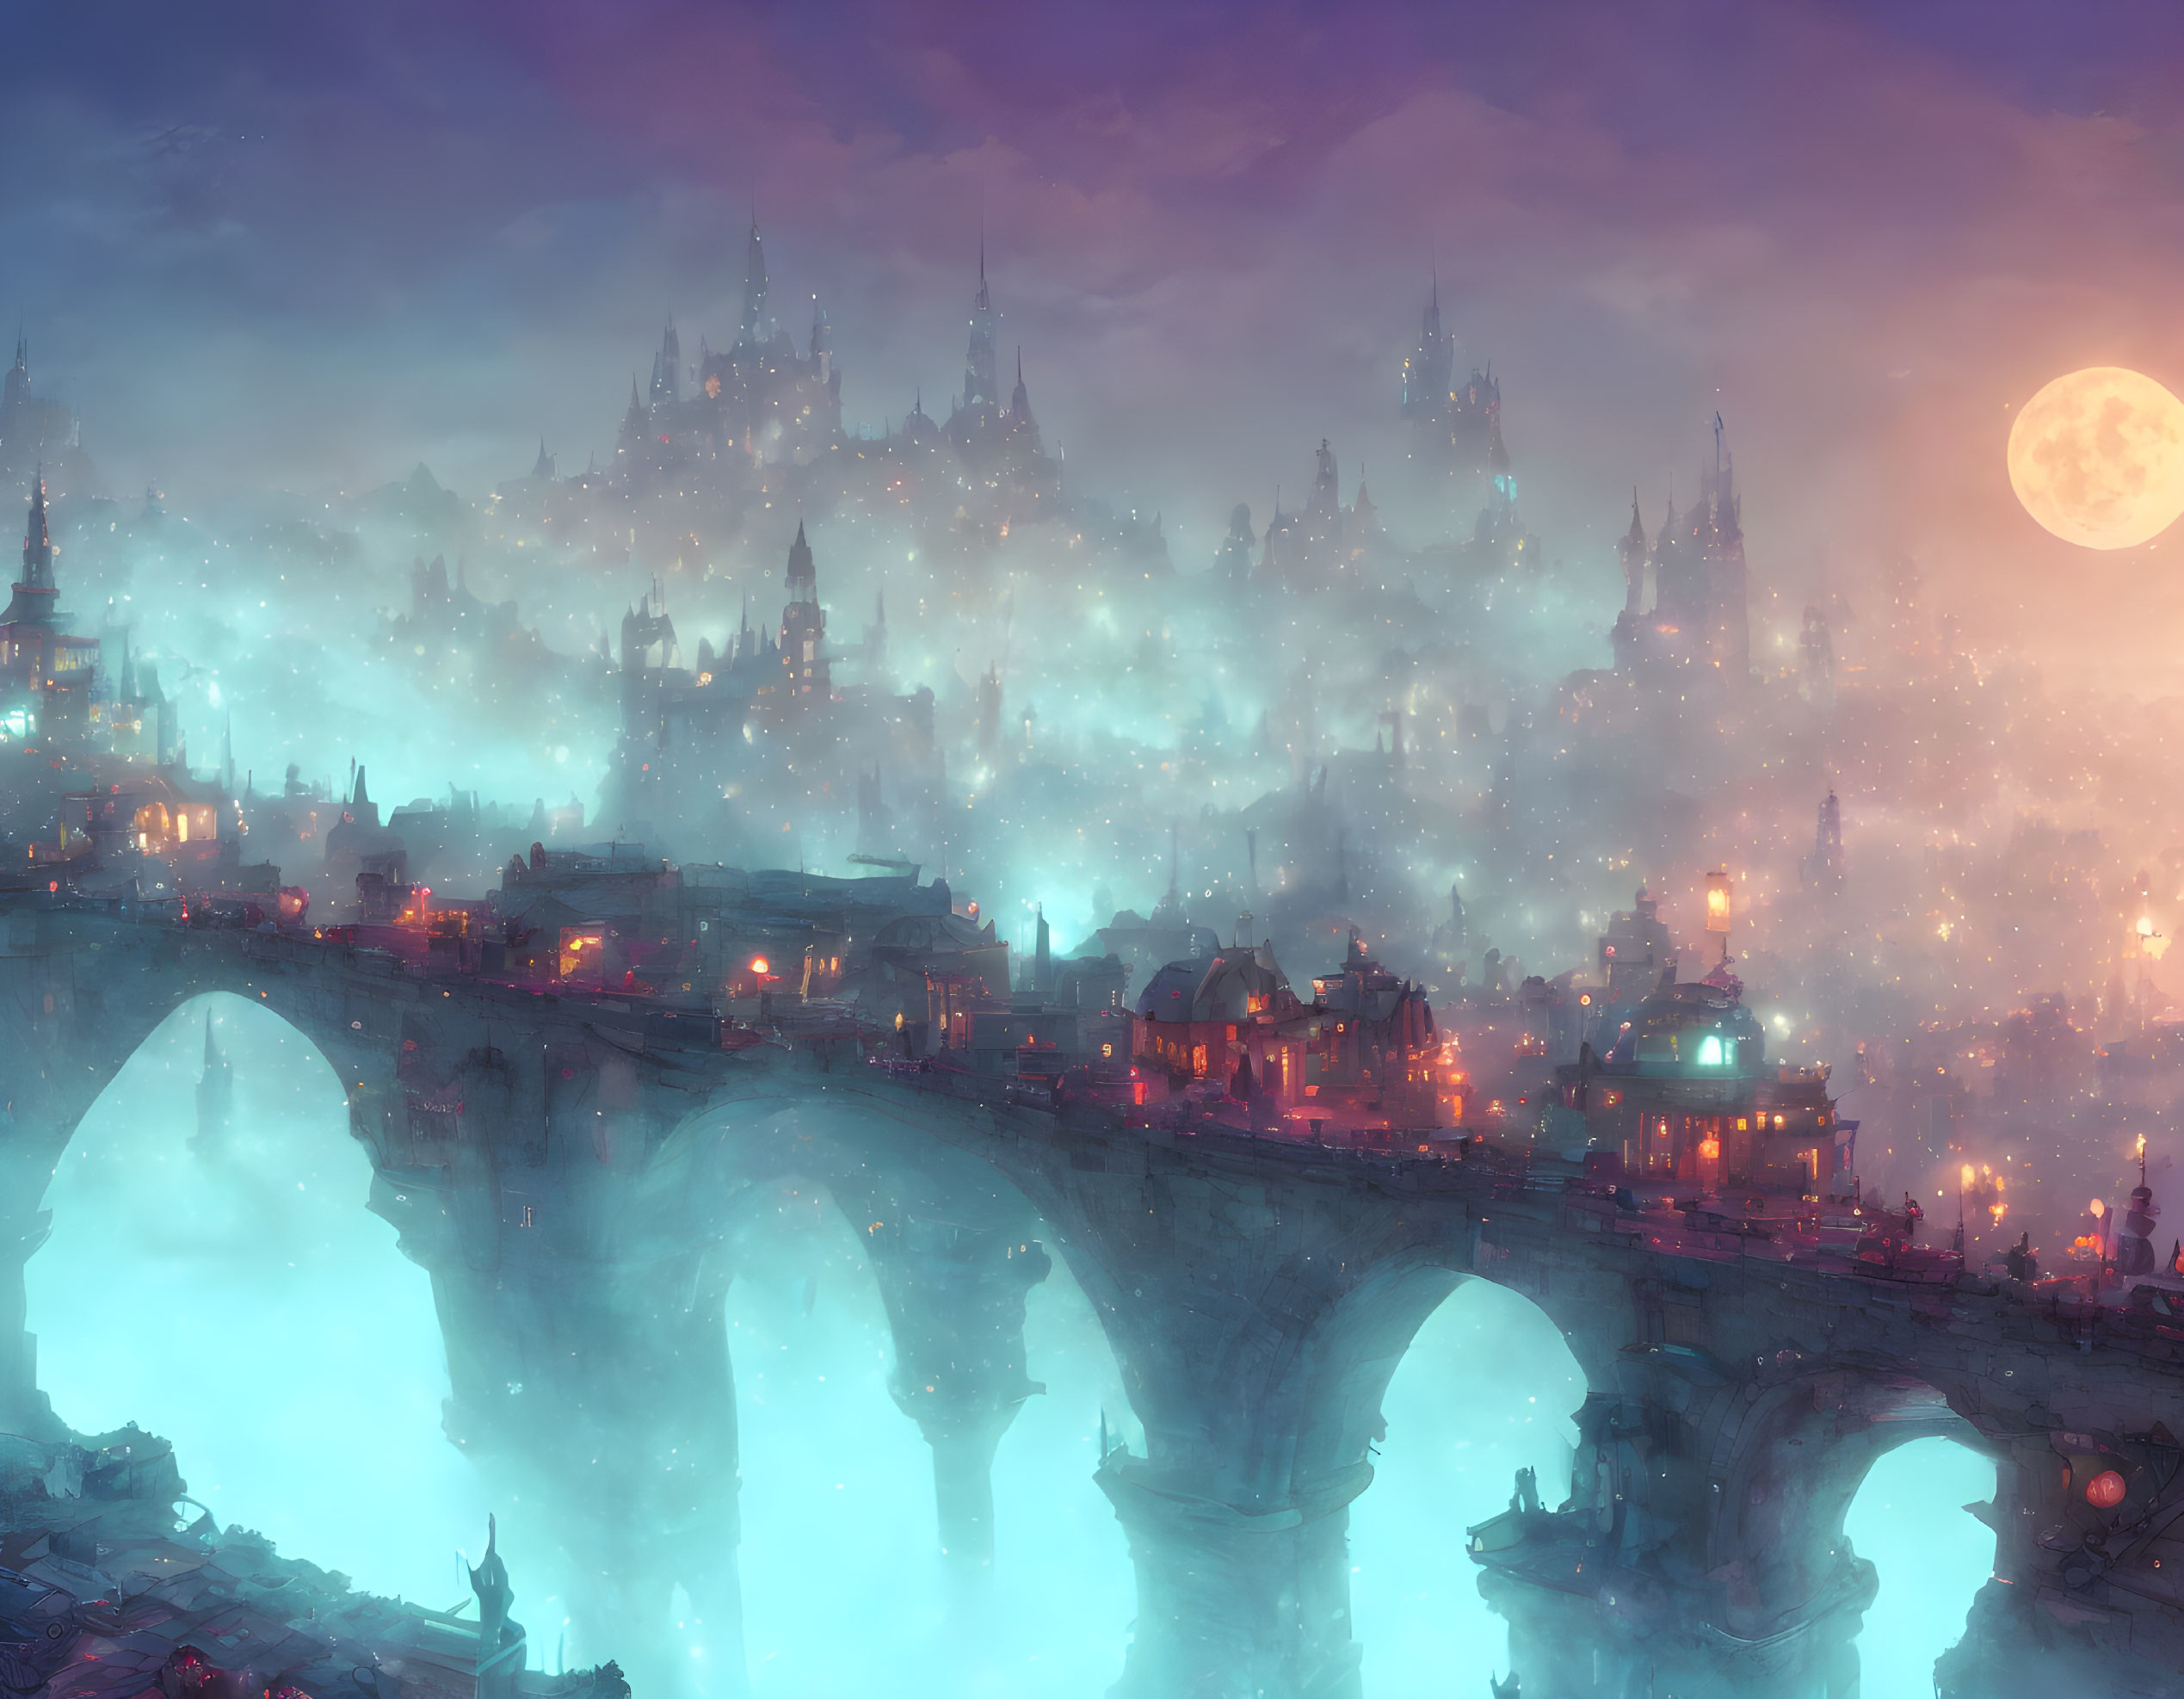 Mystical cityscape with illuminated spires and moonlit bridge